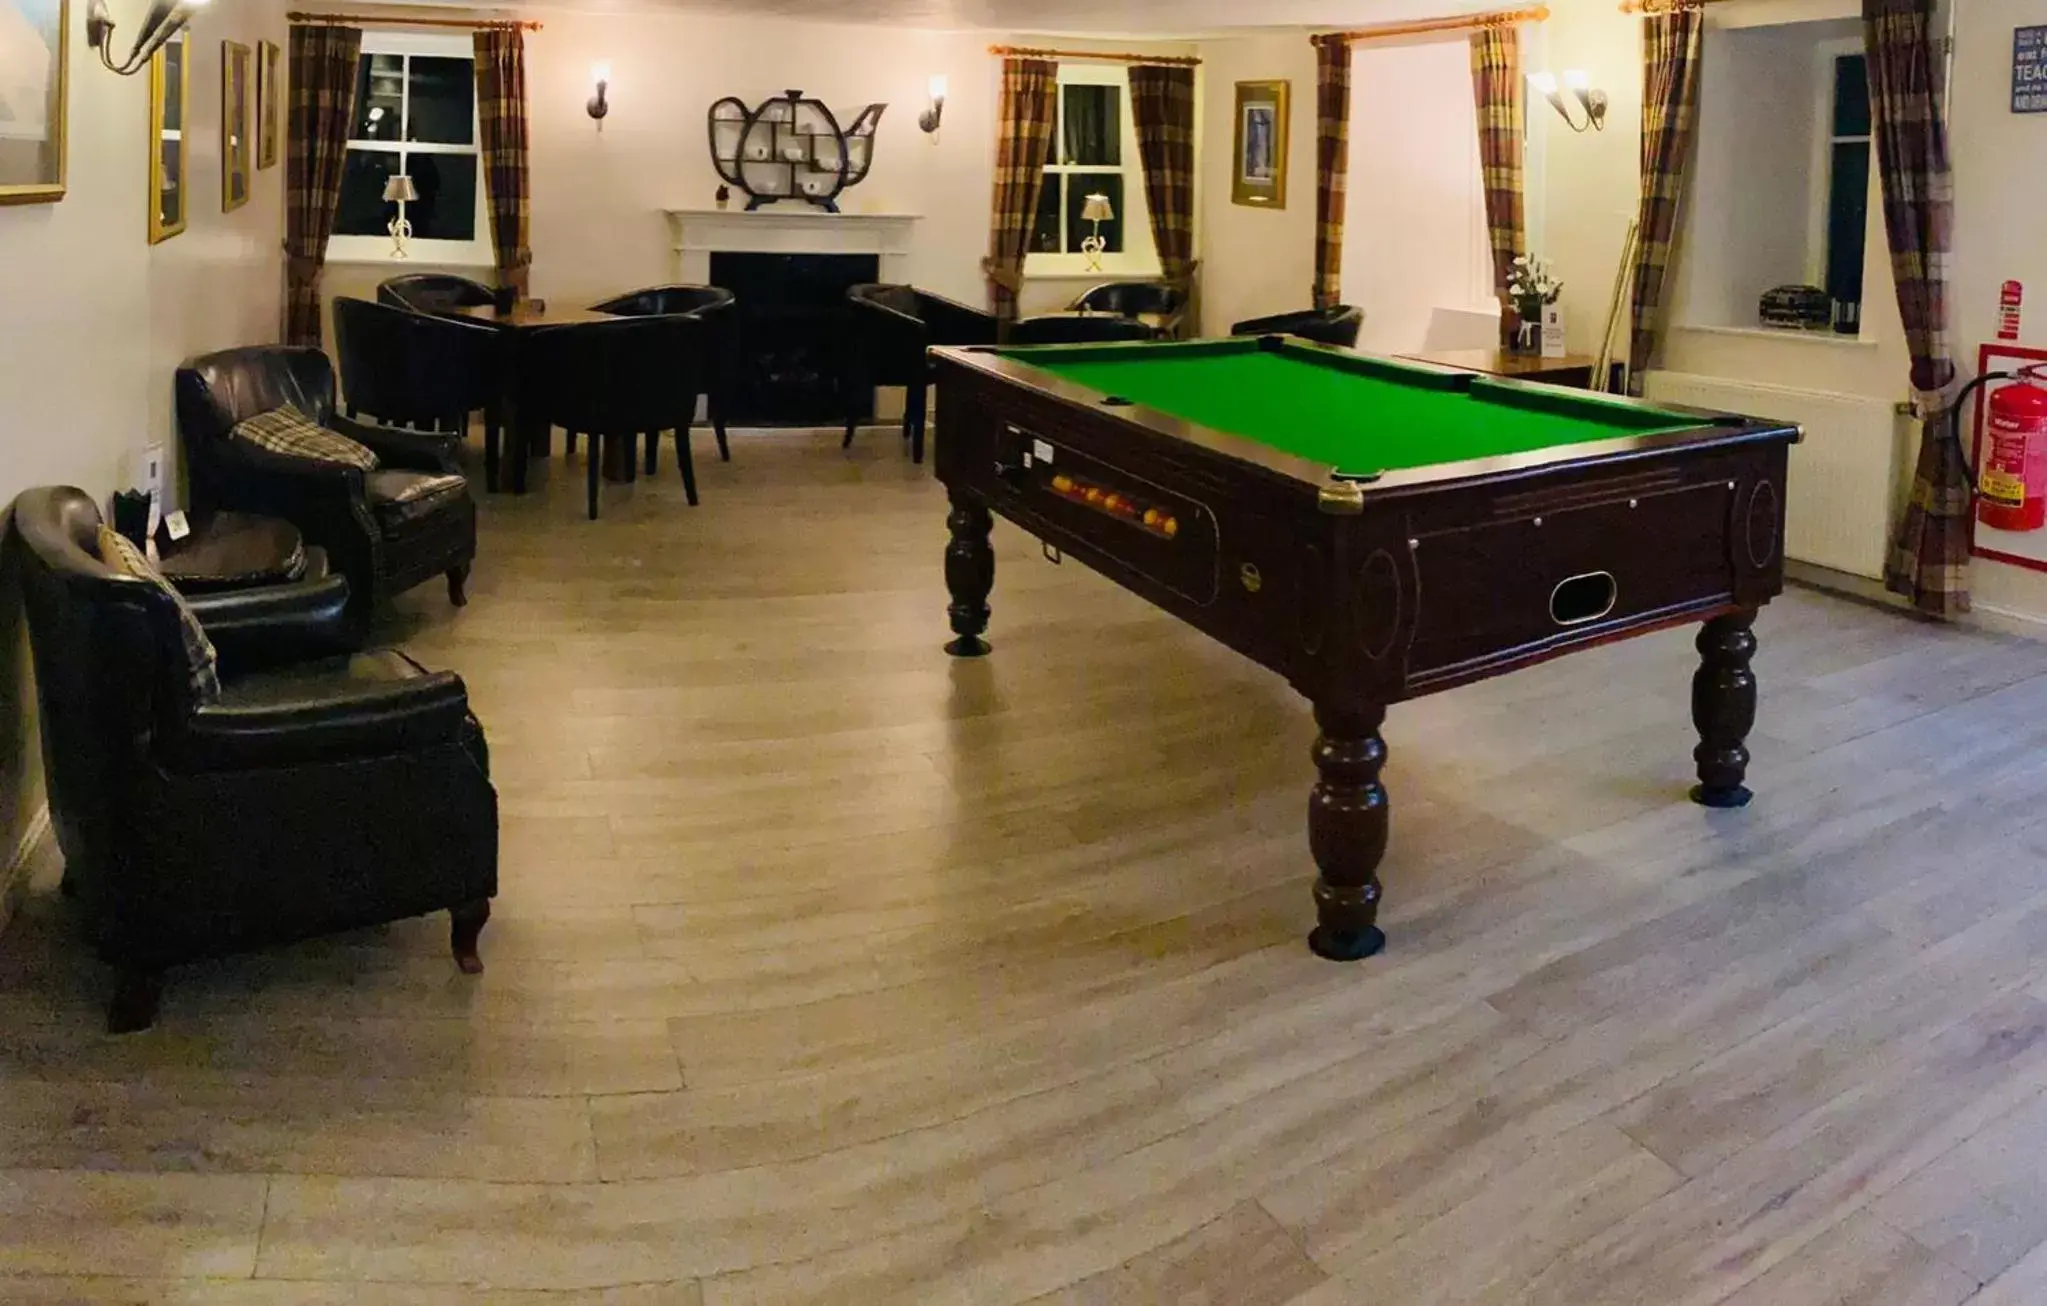 Game Room, Billiards in Bridge of Cally Hotel